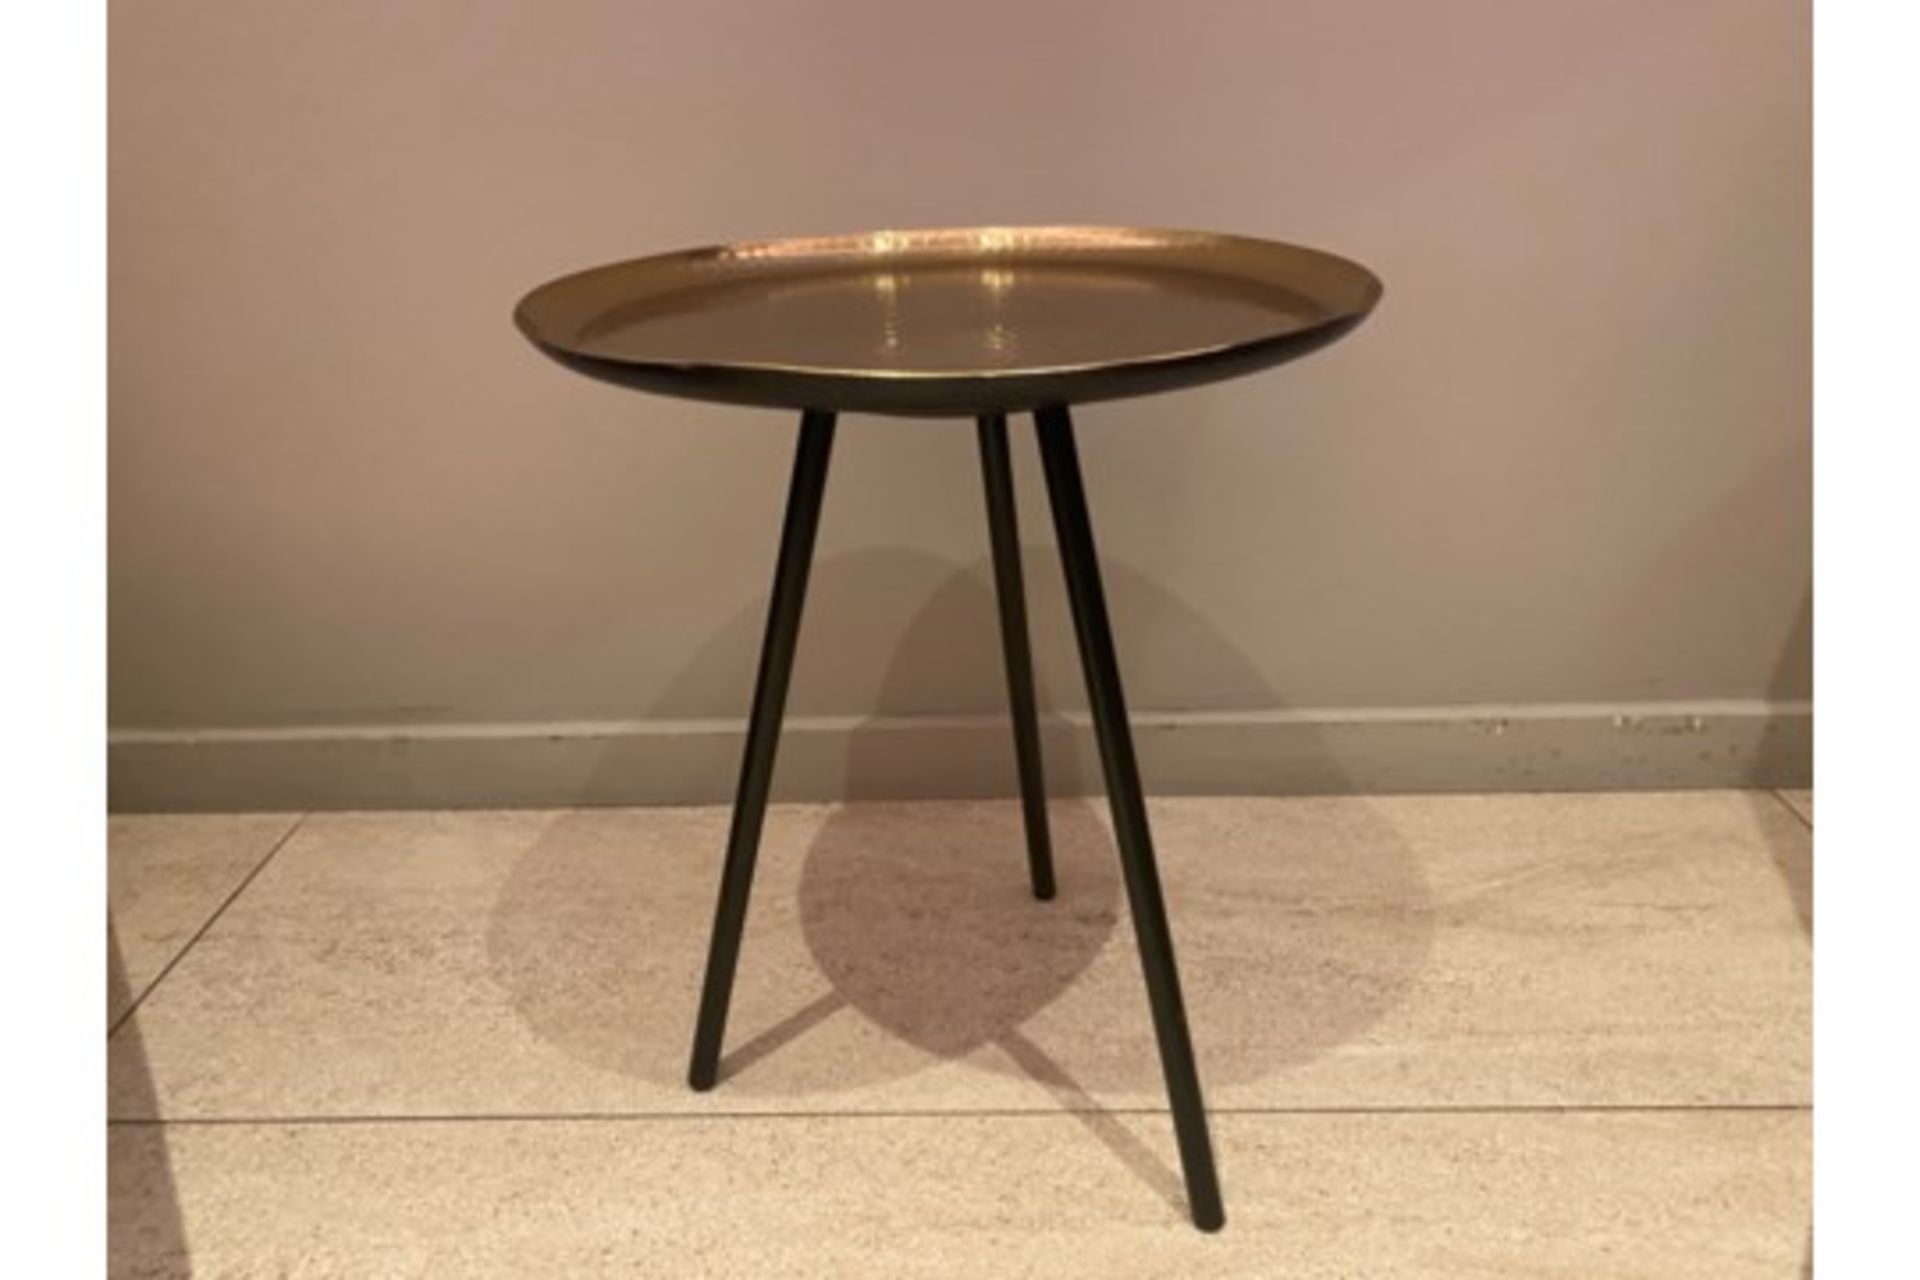 Copper Designer Table - Image 2 of 2